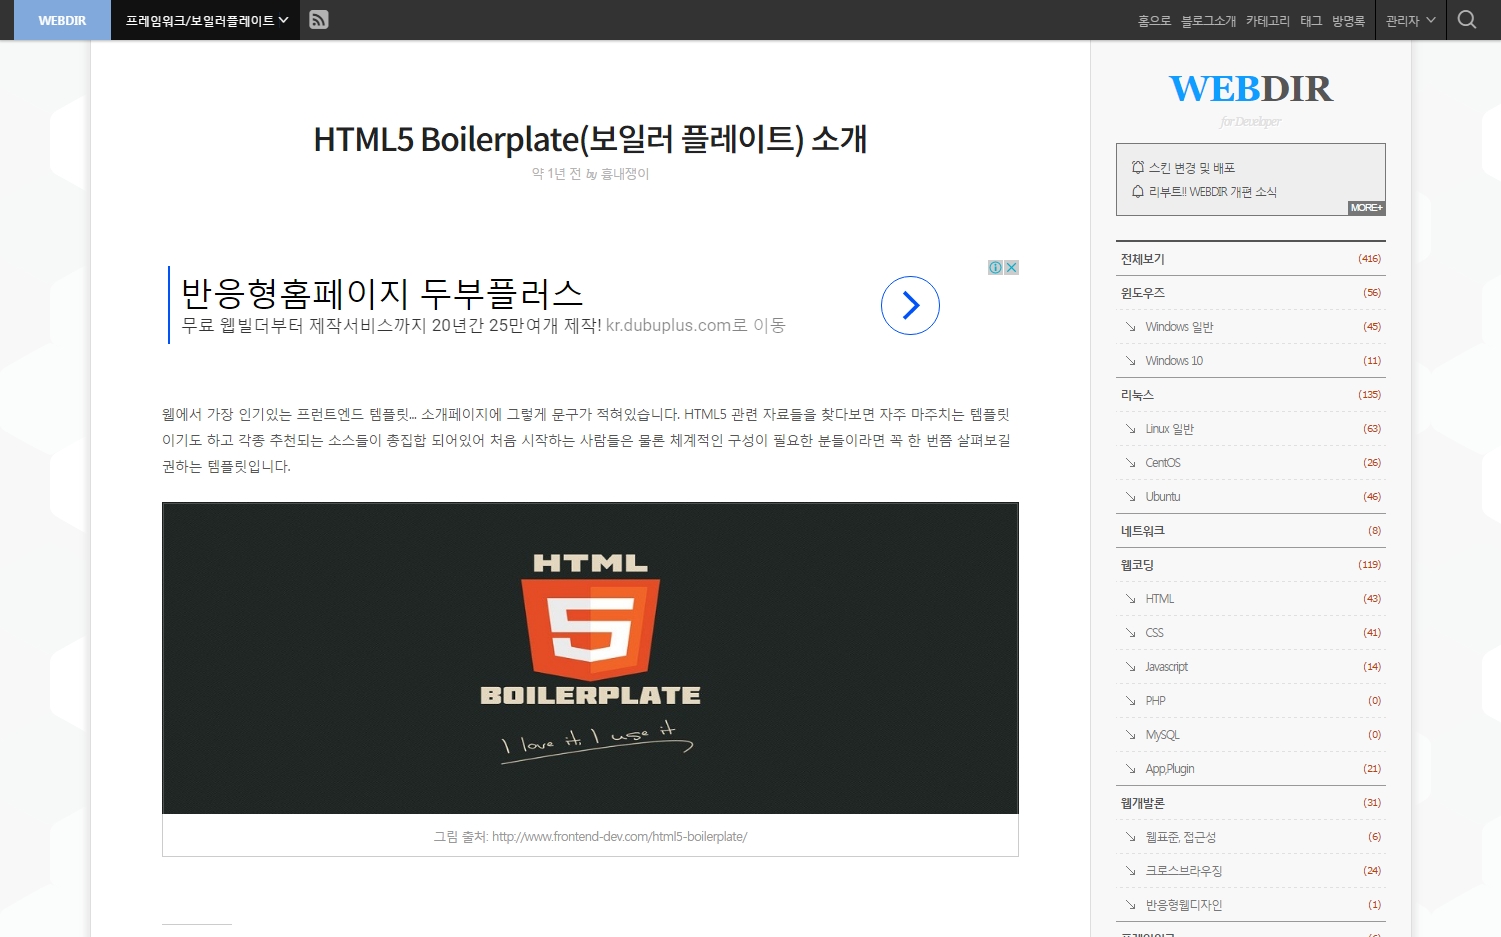 HTML5 Boilerplate(보일러 플레이트) 소개